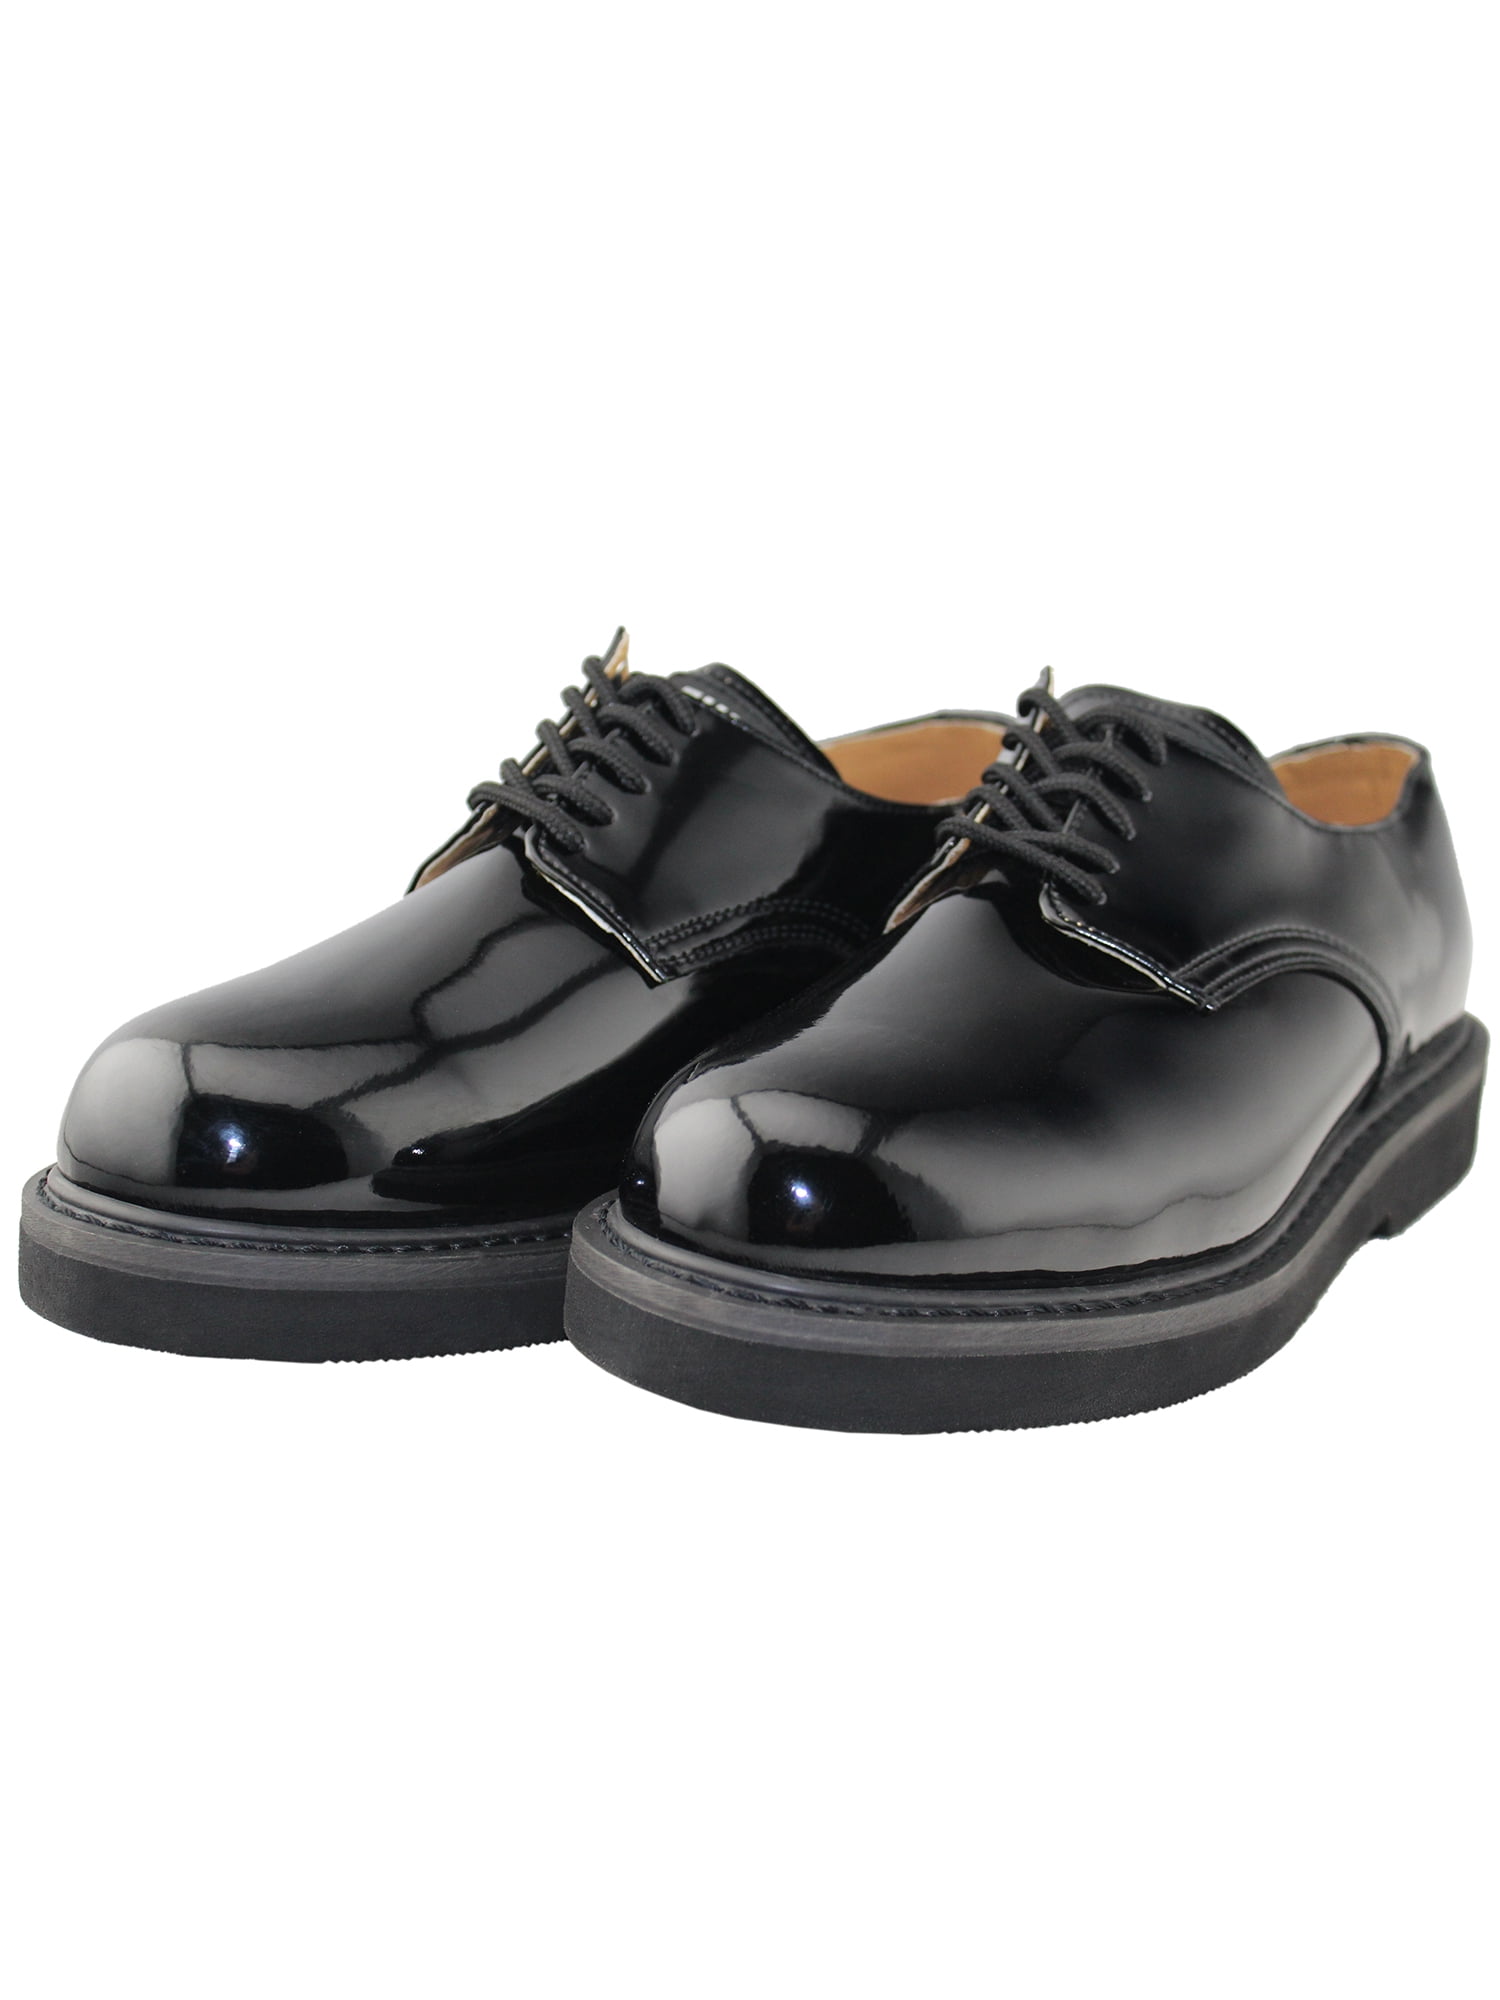 walmart formal shoes